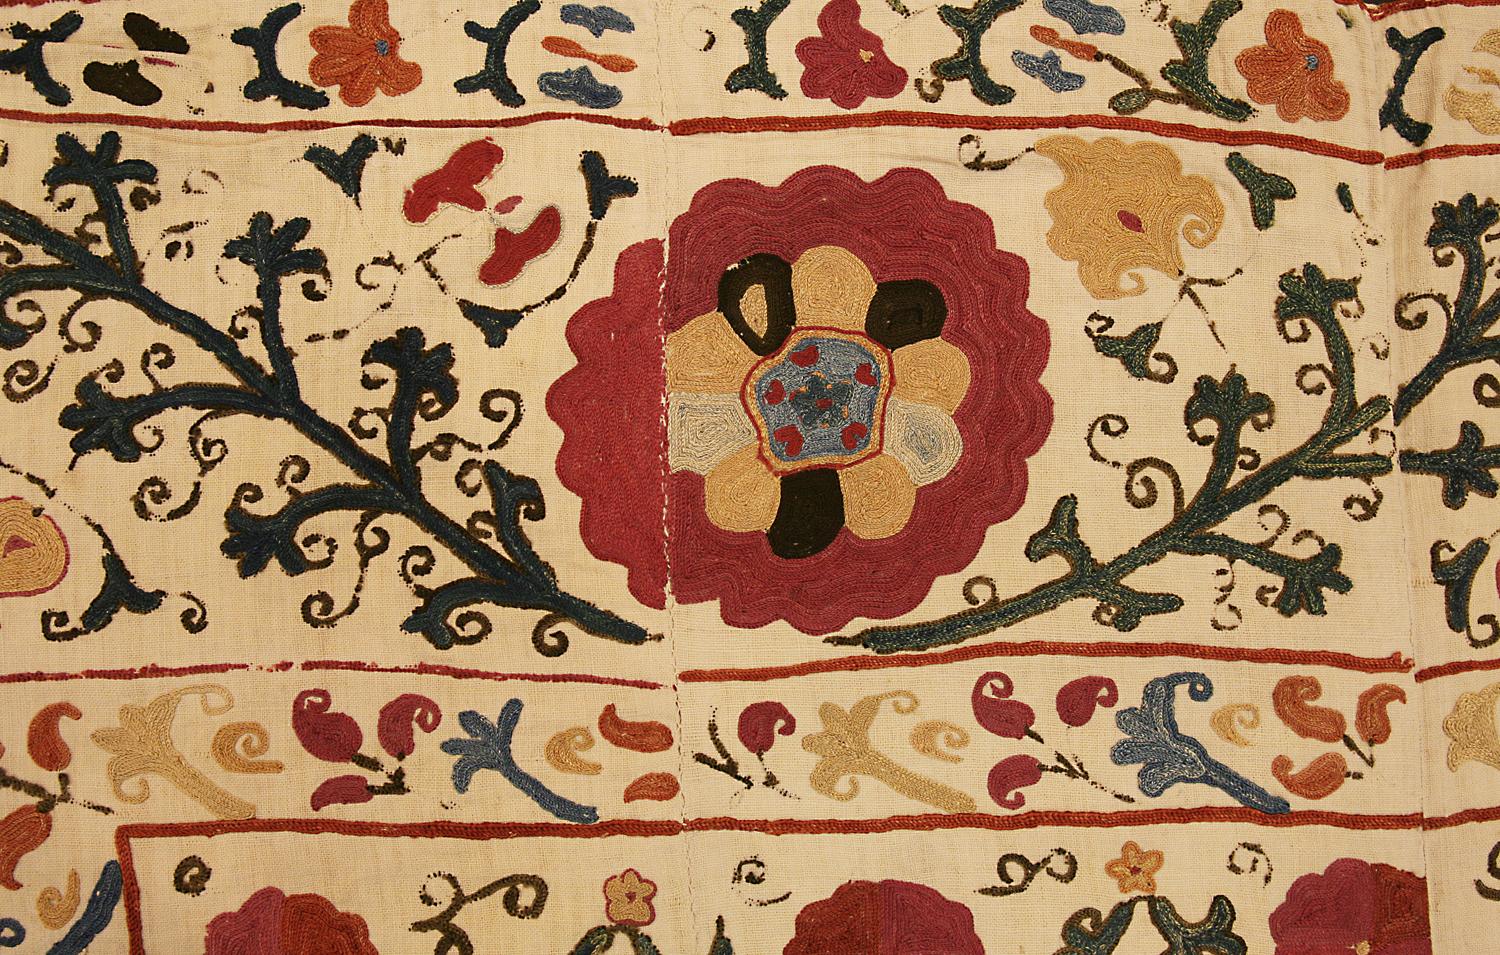 Hand-Knotted Antique Uzbek Suzani Textile, 19th Century